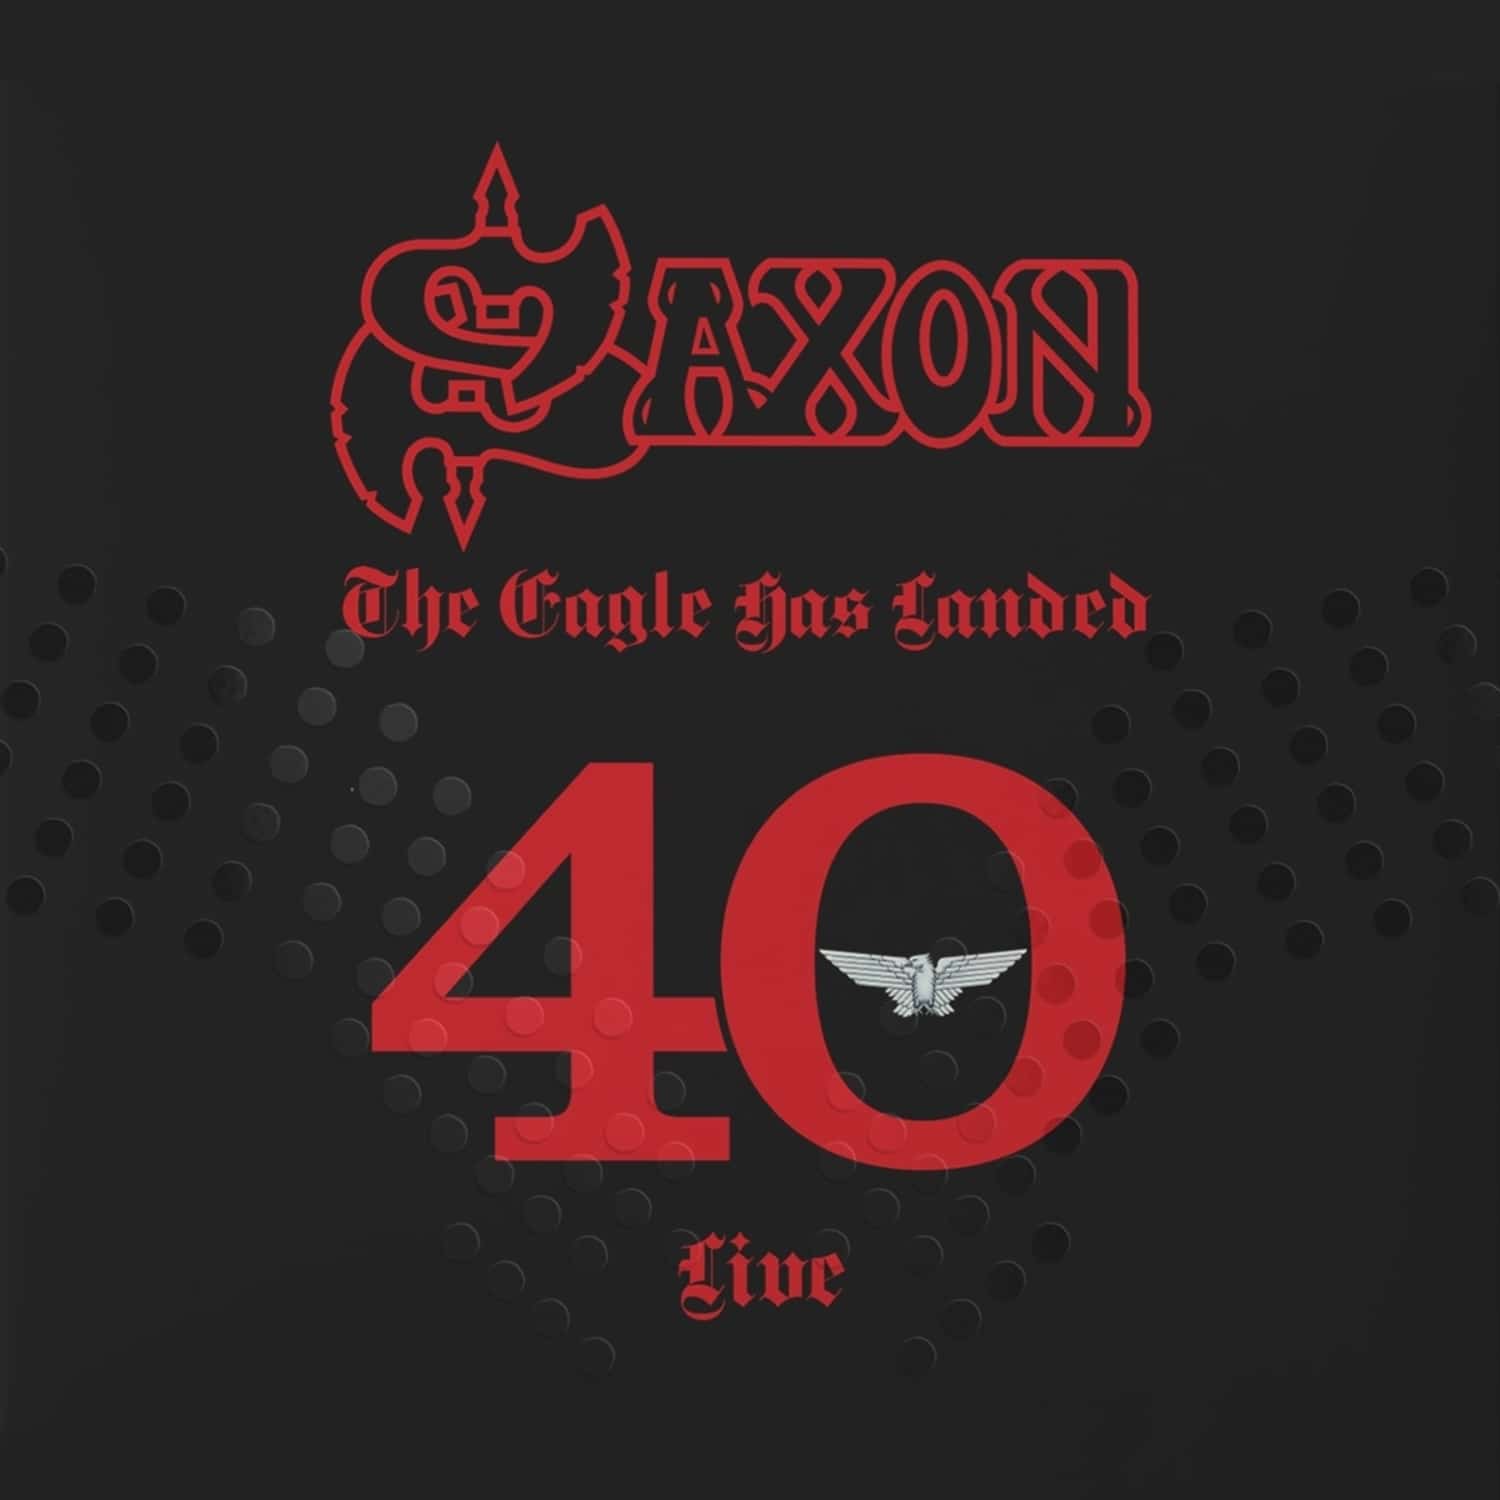 Saxon - THE EAGLE HAS LANDED 40 